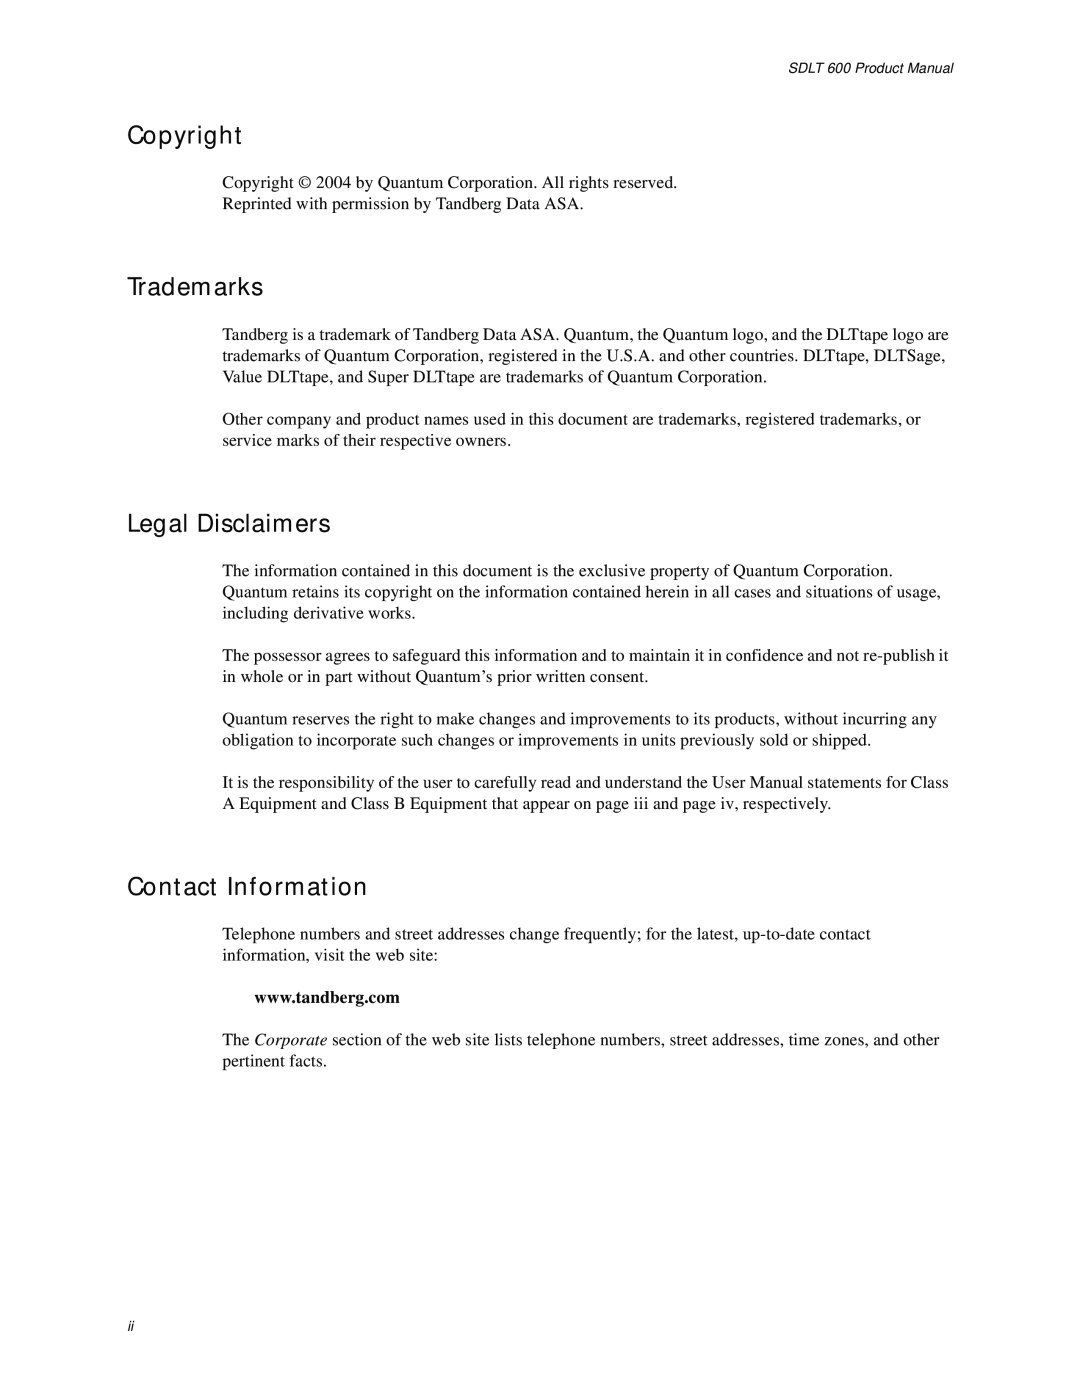 Tandberg Data 600 manual Copyright, Trademarks, Legal Disclaimers, Contact Information 